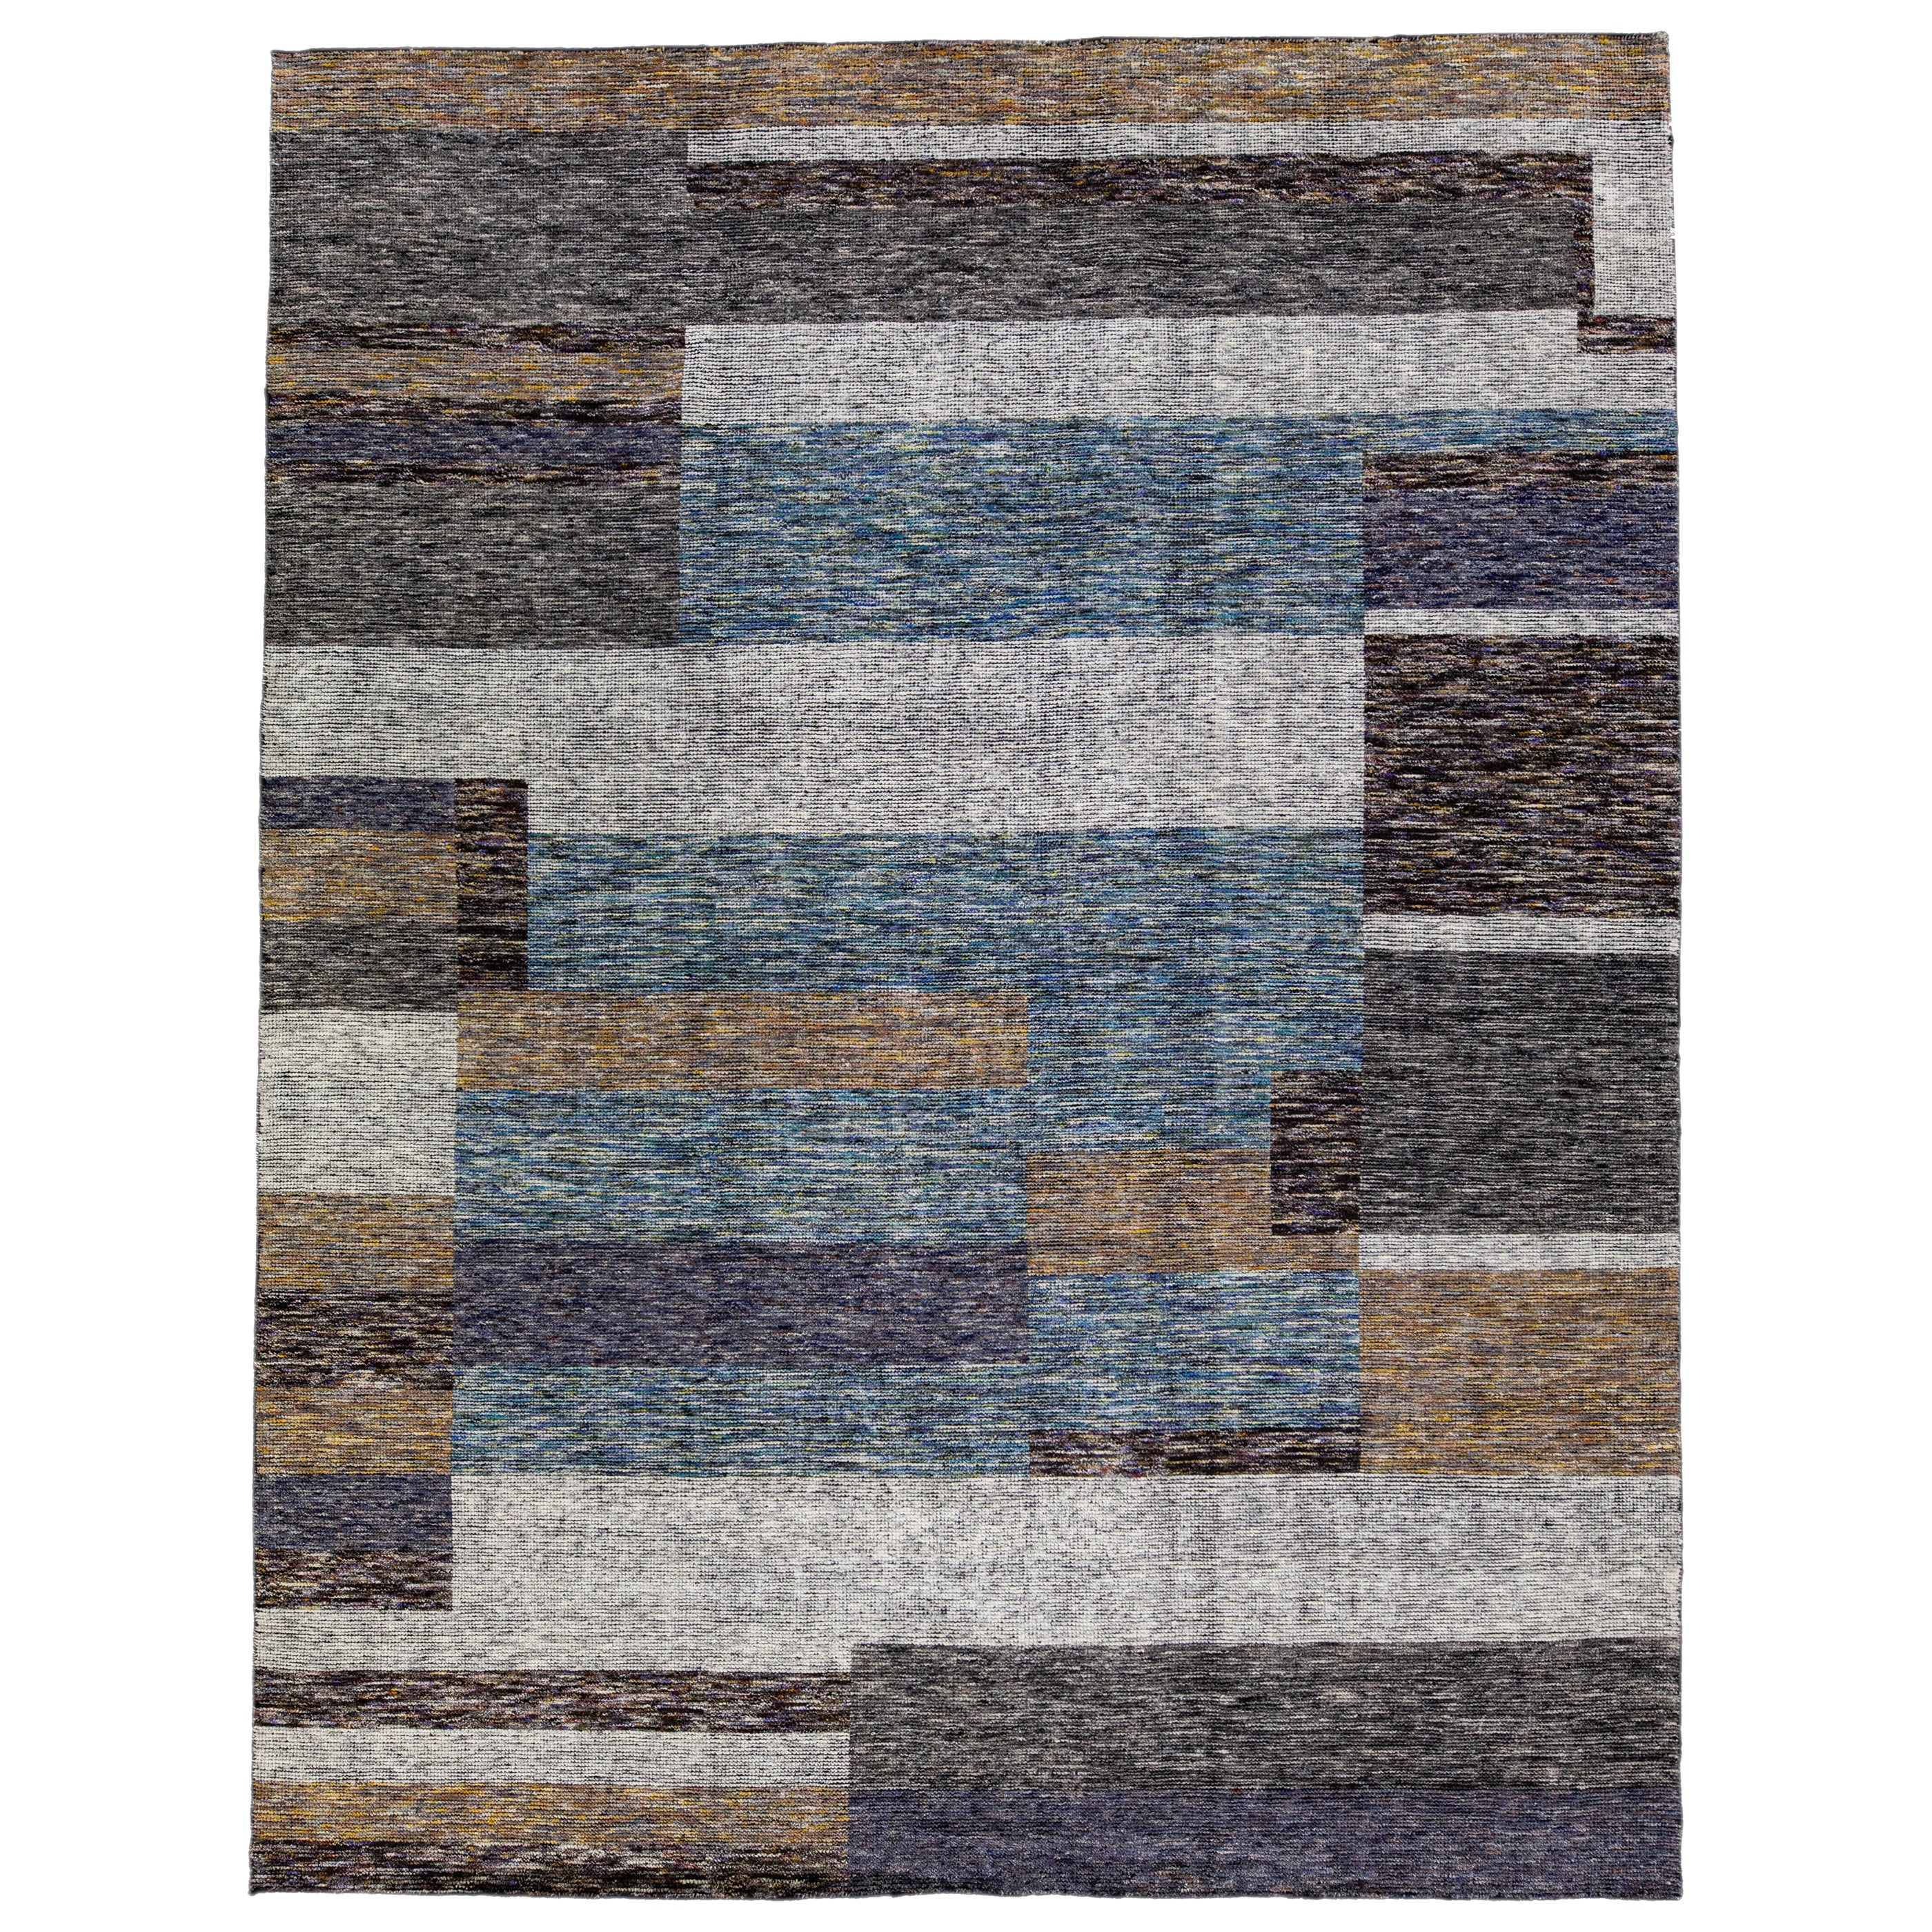 Modern Apadana's Safi Collection Handmade Earthy Tone Abstract Designed Wool Rug For Sale